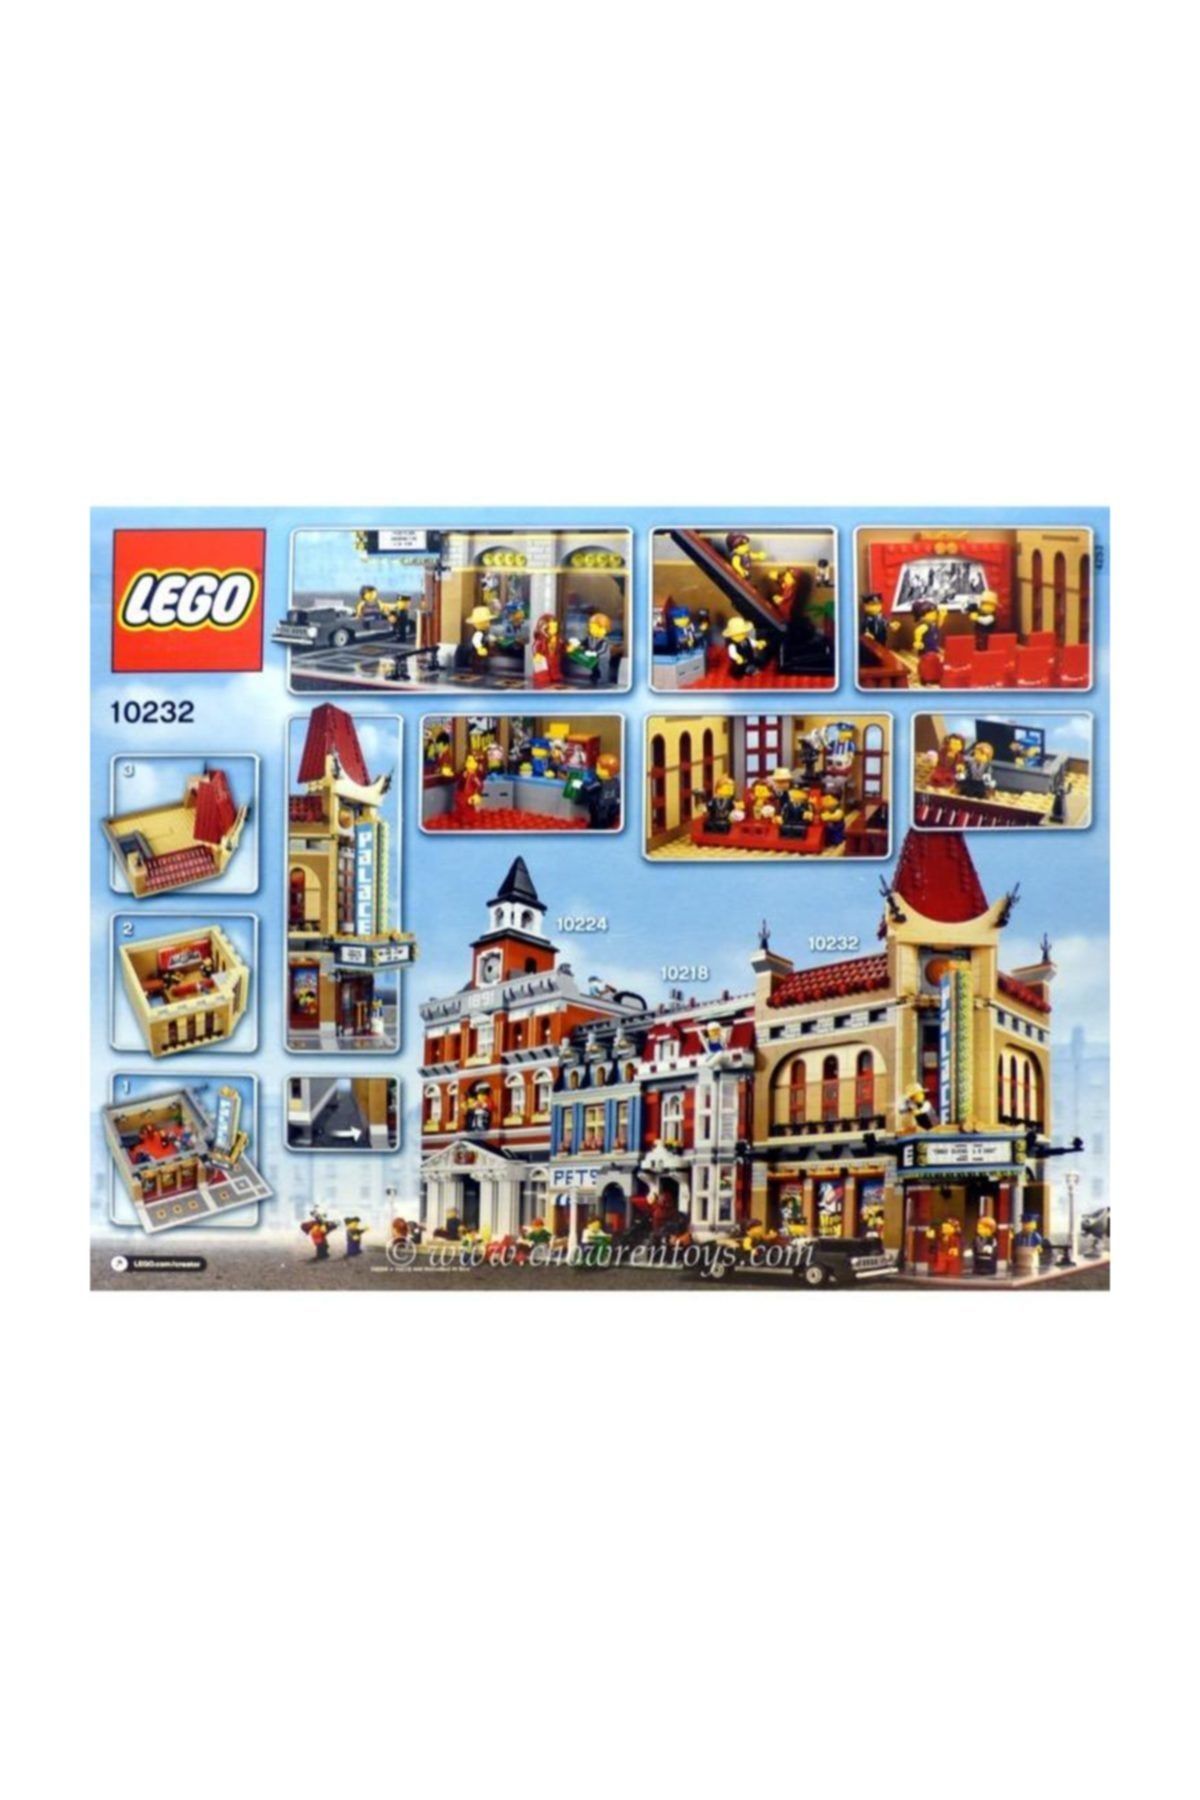 LEGO Creator Expert 10232 Palace Cinema